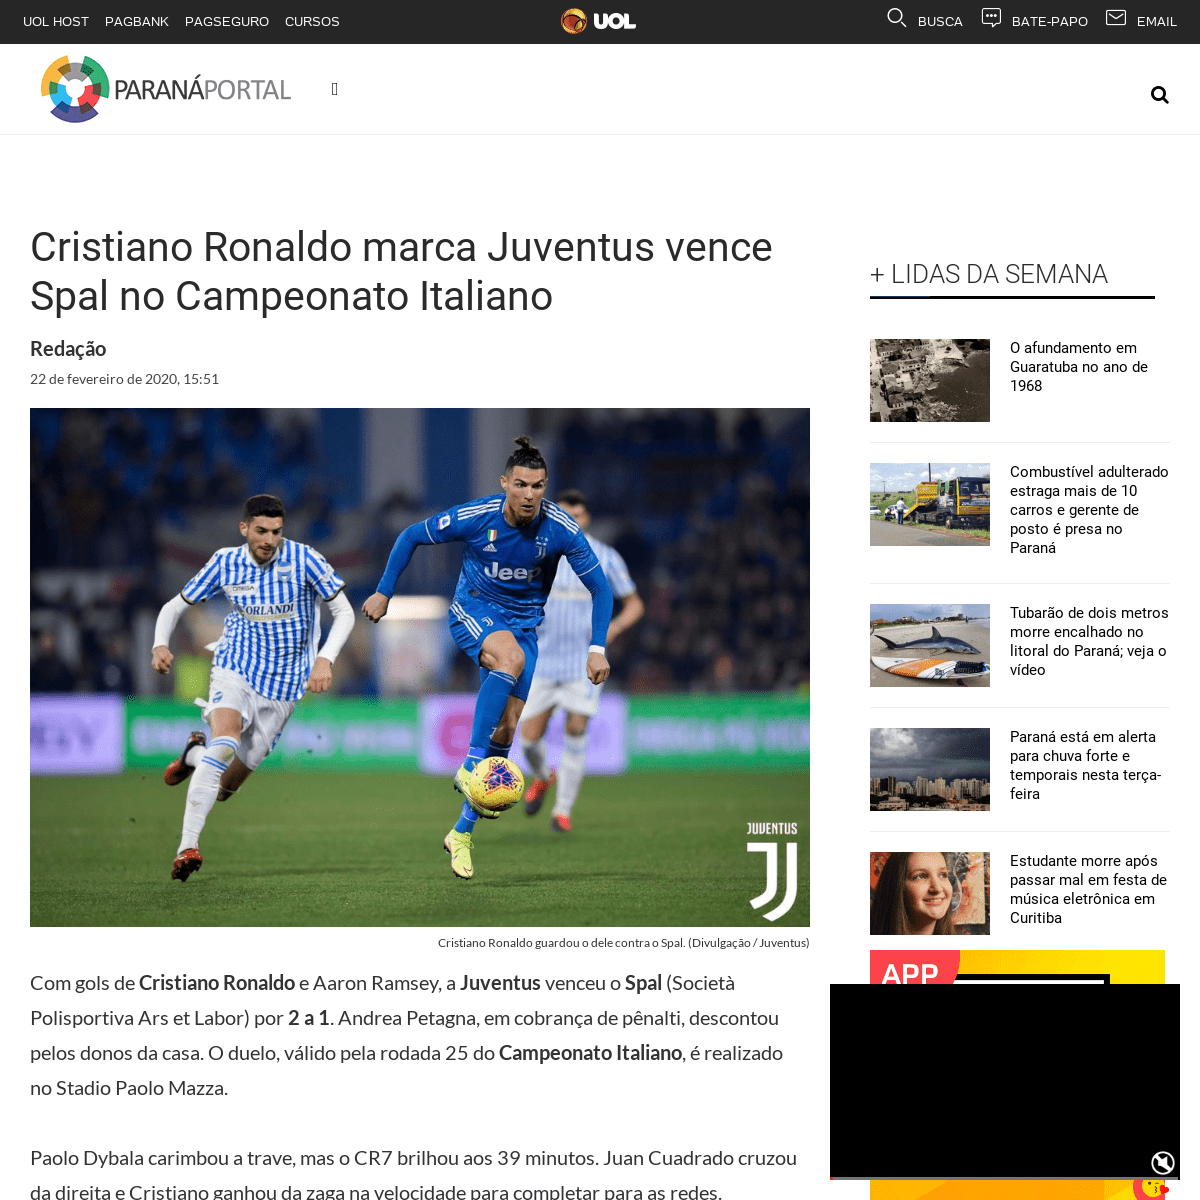 A complete backup of paranaportal.uol.com.br/esportes/cristiano-ronaldo-gol-juventus-spal-campeonato-italiano/